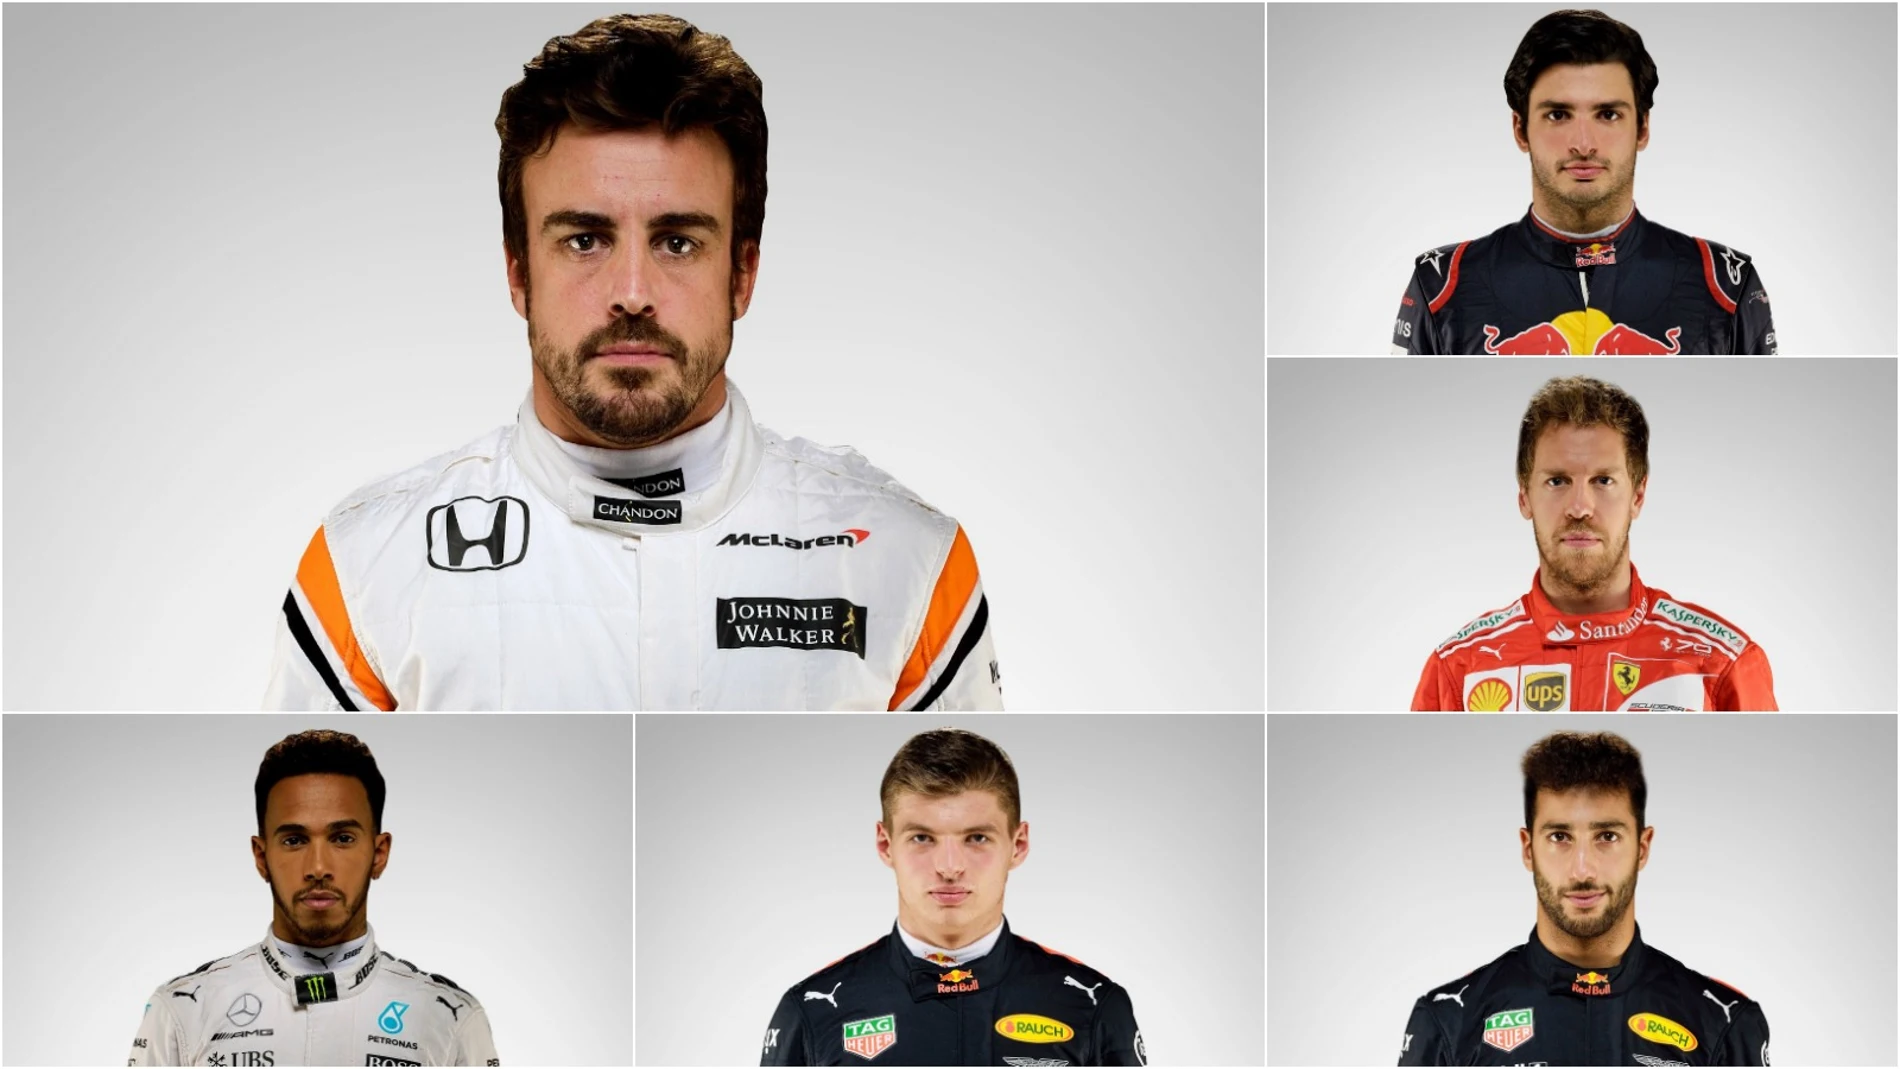 ¿Quién crees que es el mejor piloto de Fórmula 1 en la parrilla de 2017?